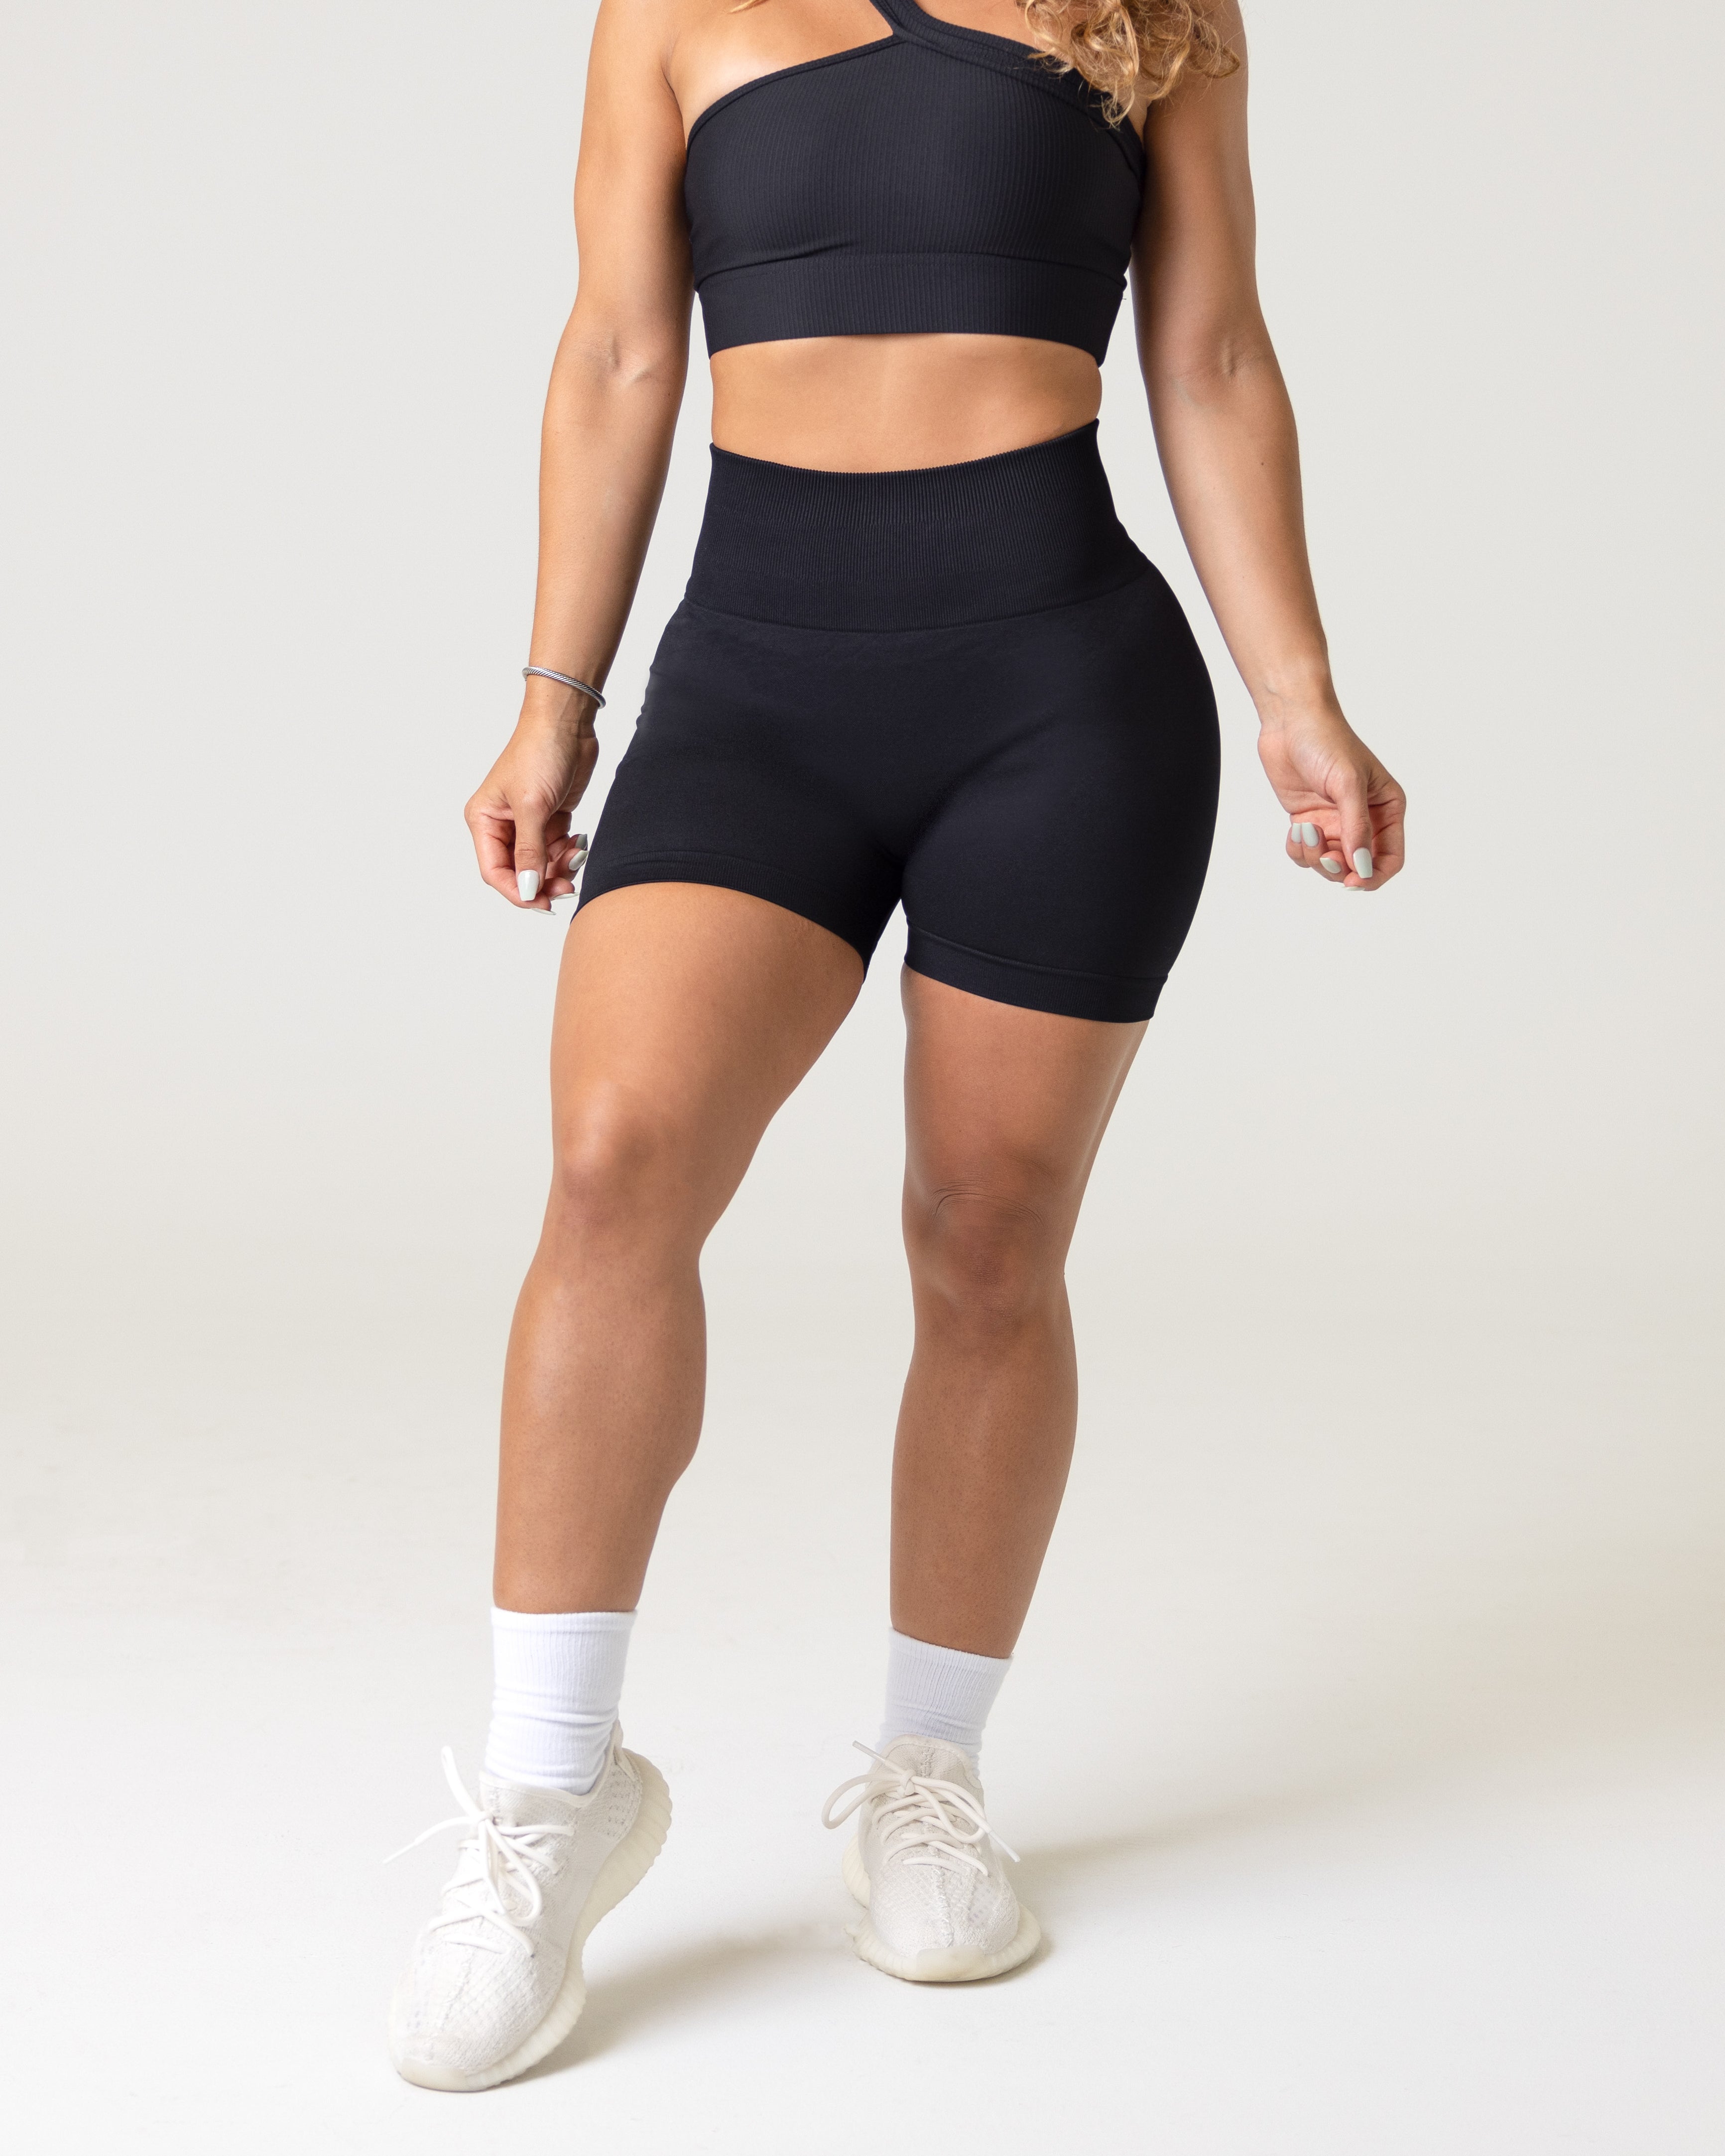 A woman wearing black activewear- workout shorts